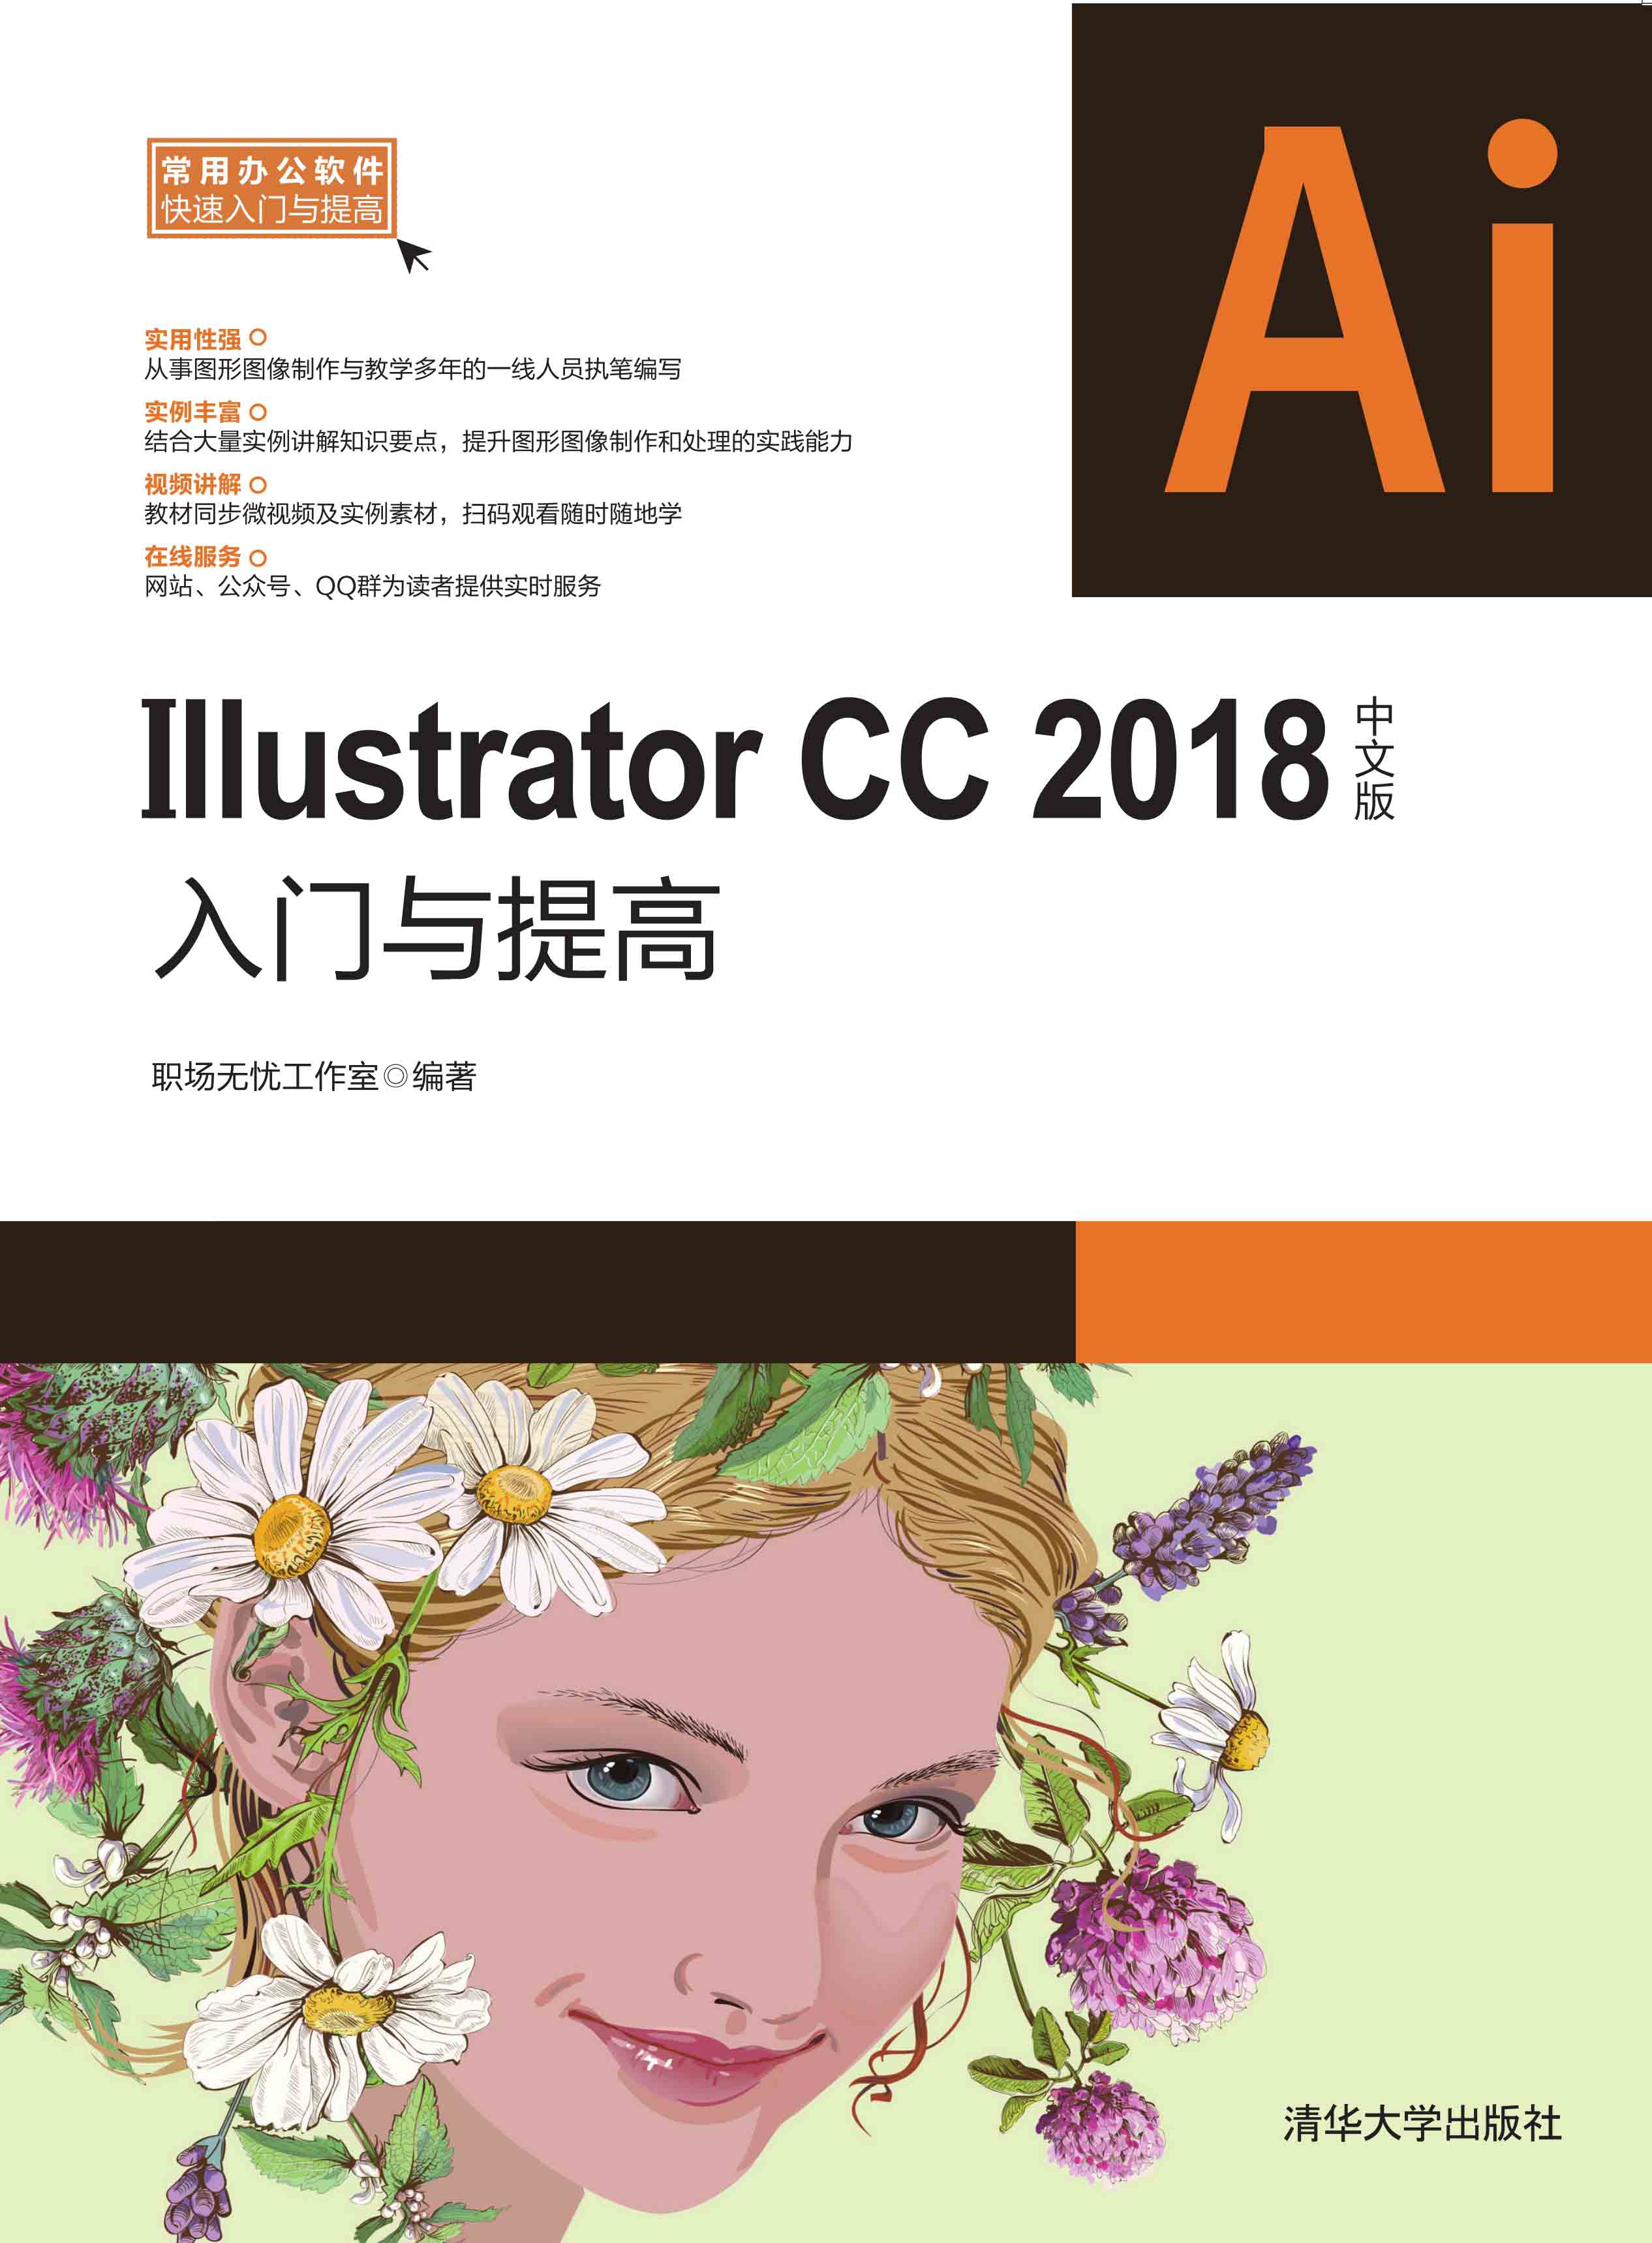 Illustrator CC 2018中文版入门与提高